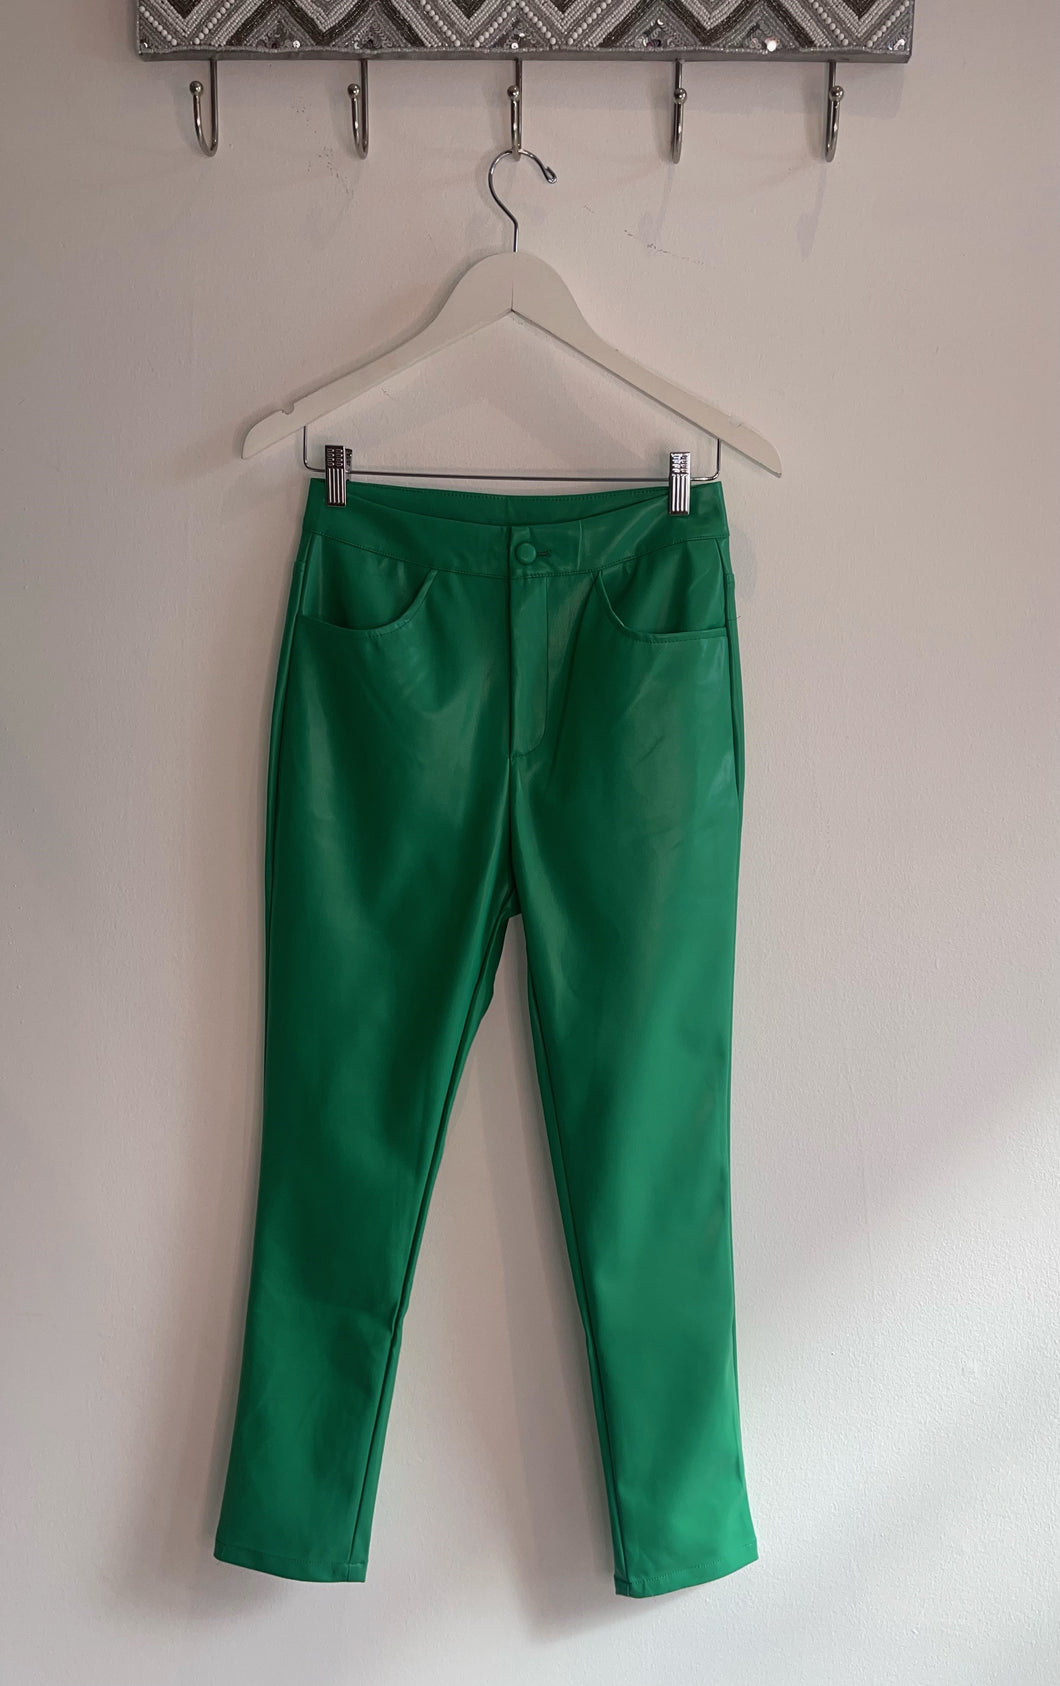 Green Apple Pants